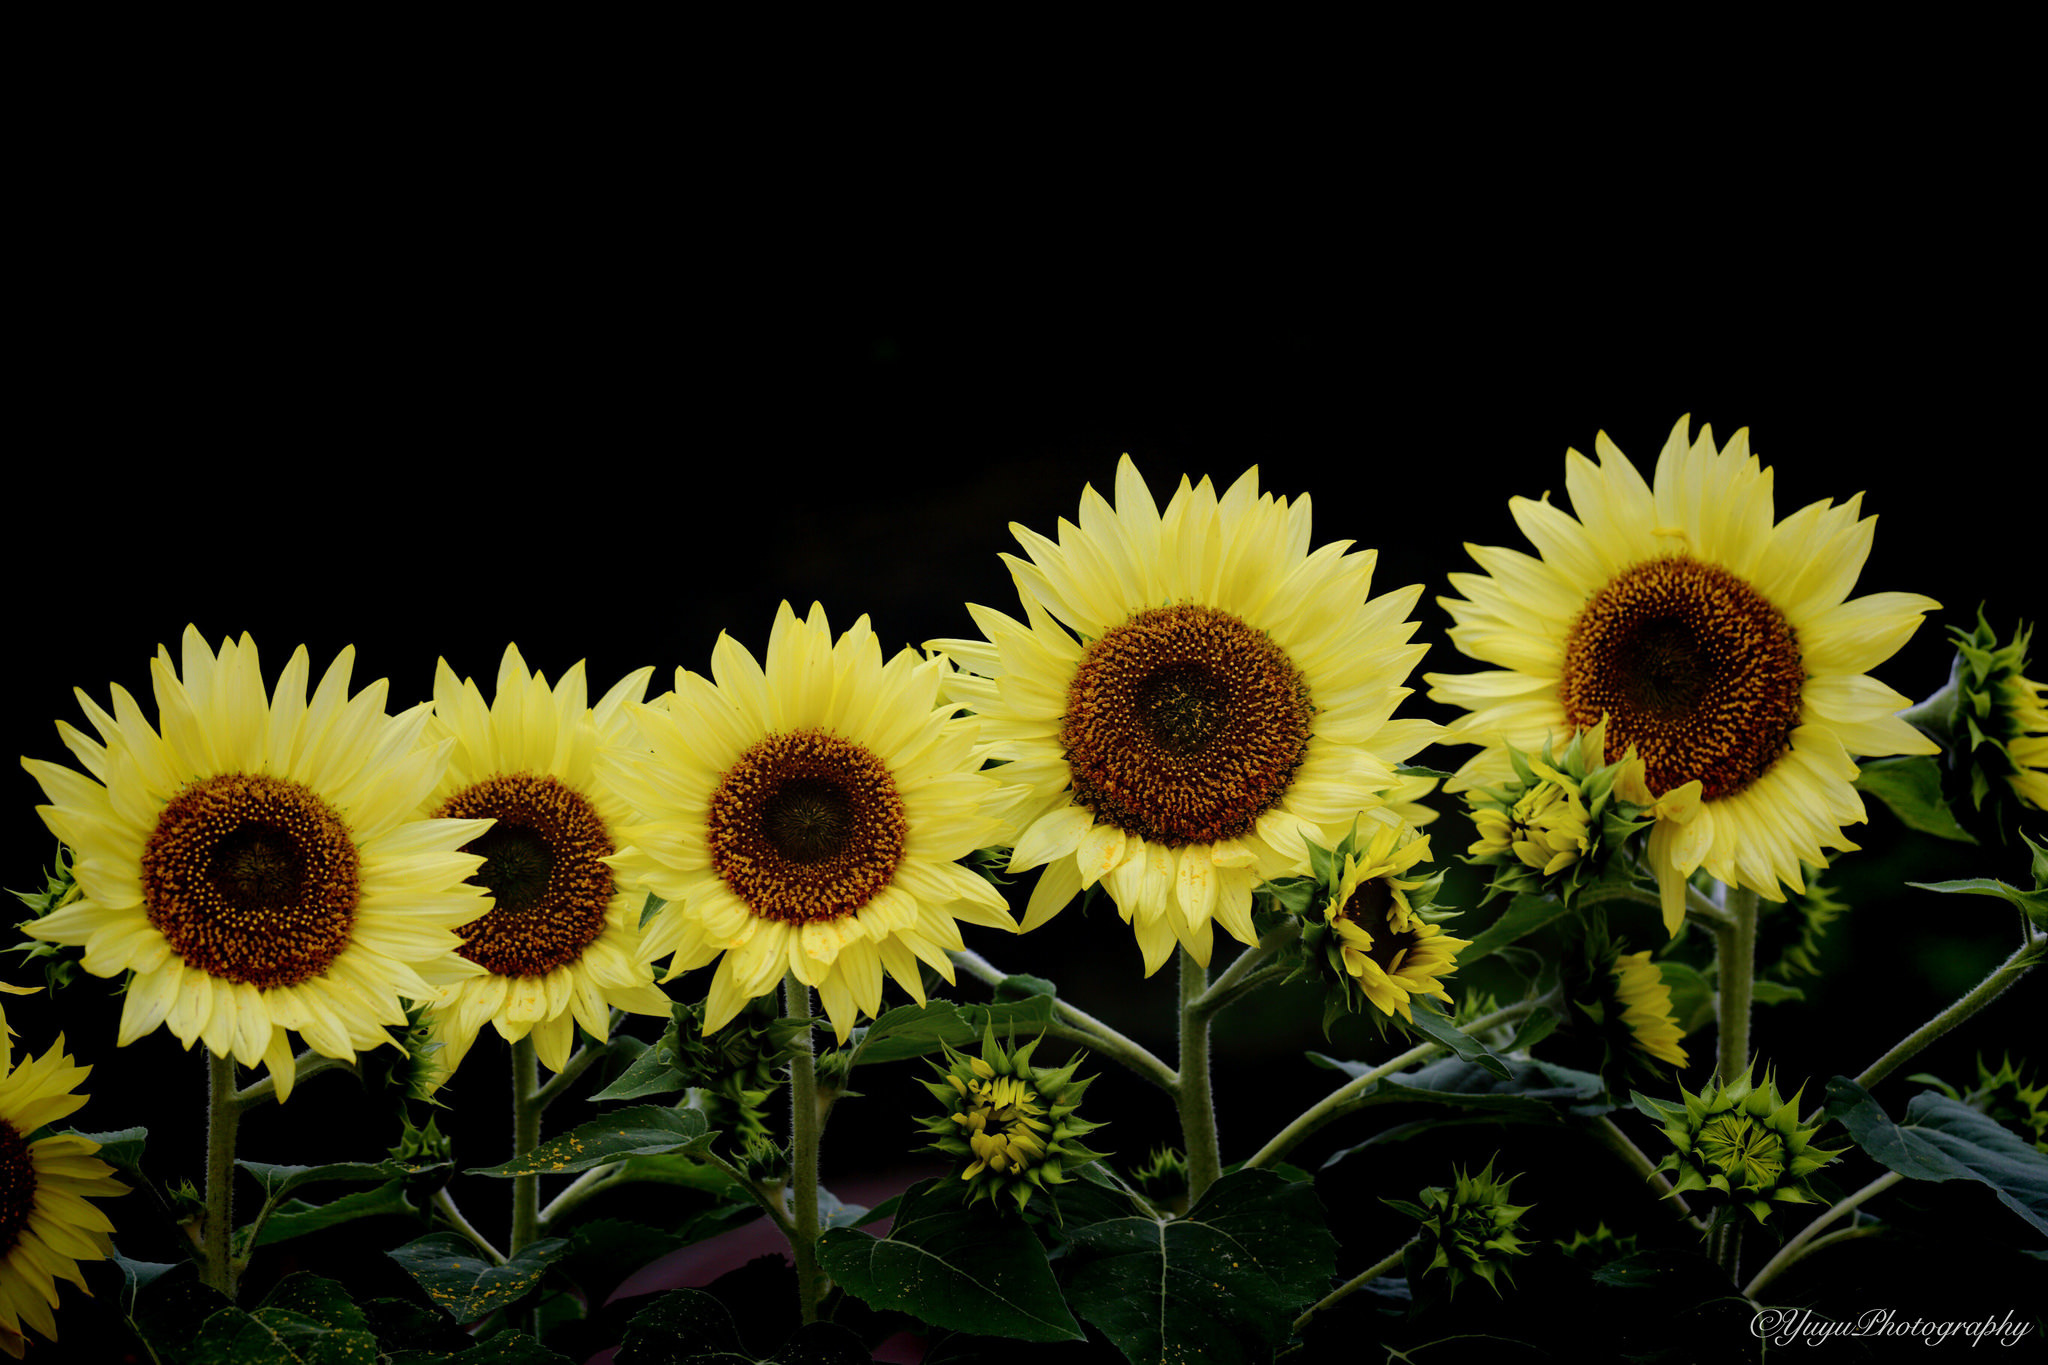 GoodFon.com - Free Wallpapers, download. summer, sunflowers, flowers. 